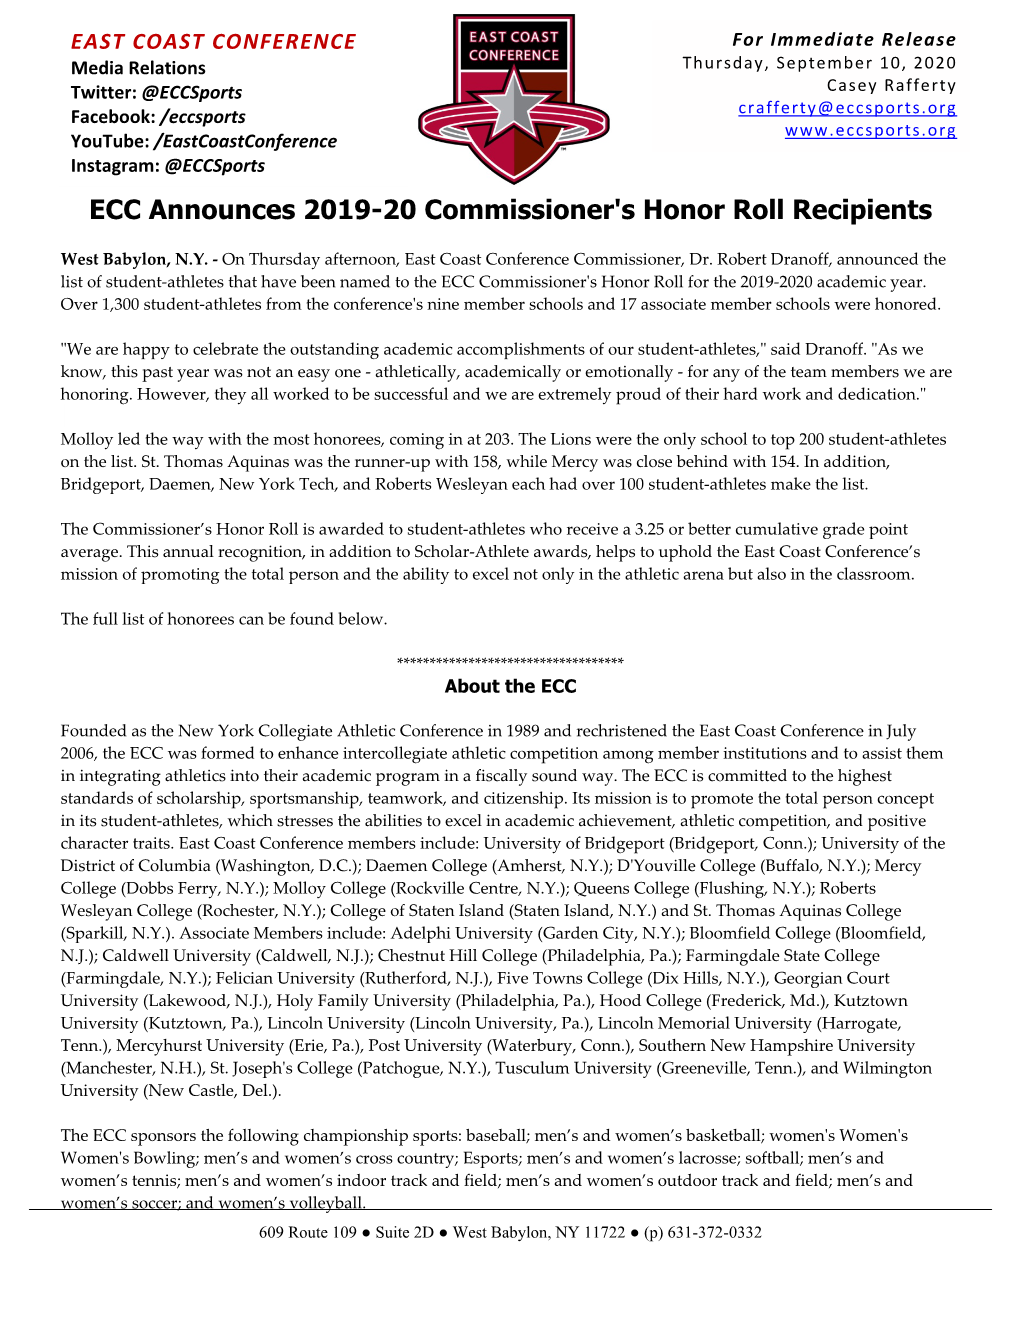 ECC Announces 2019-20 Commissioner's Honor Roll Recipients